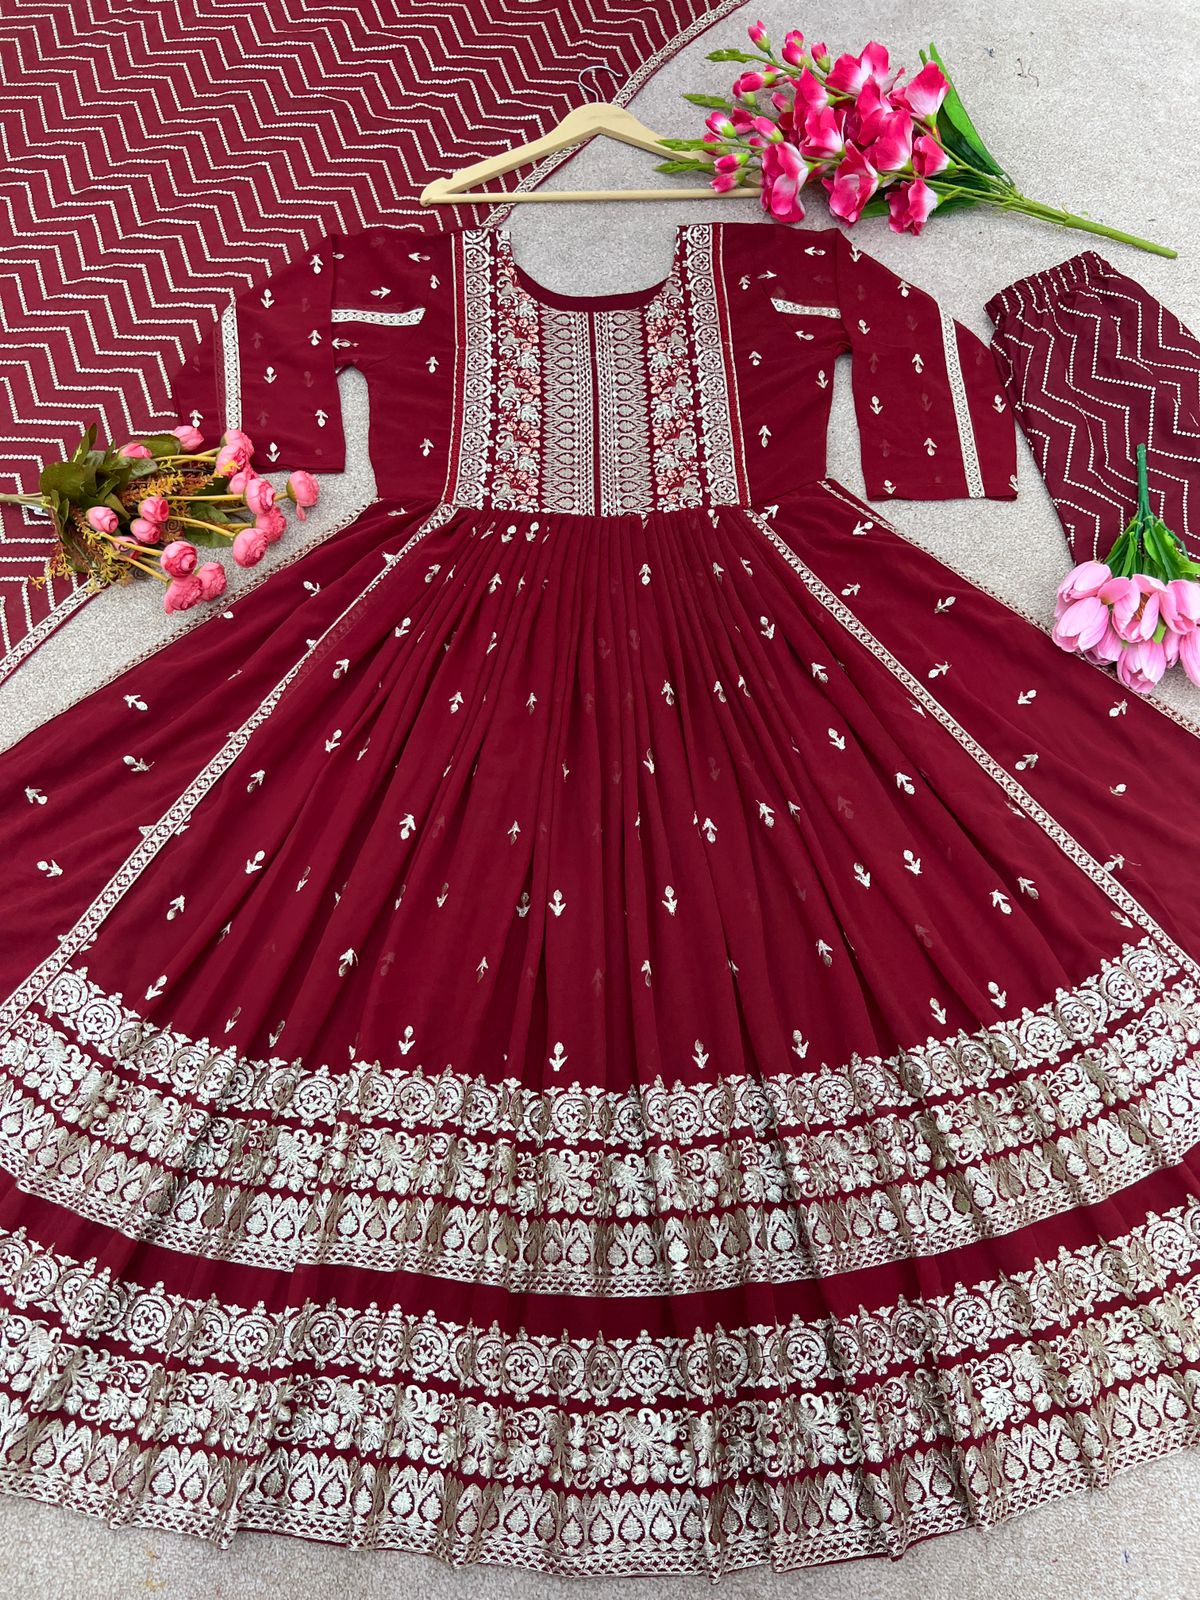 Marvelous Maroon Color Embroidery Work Salwar Suit